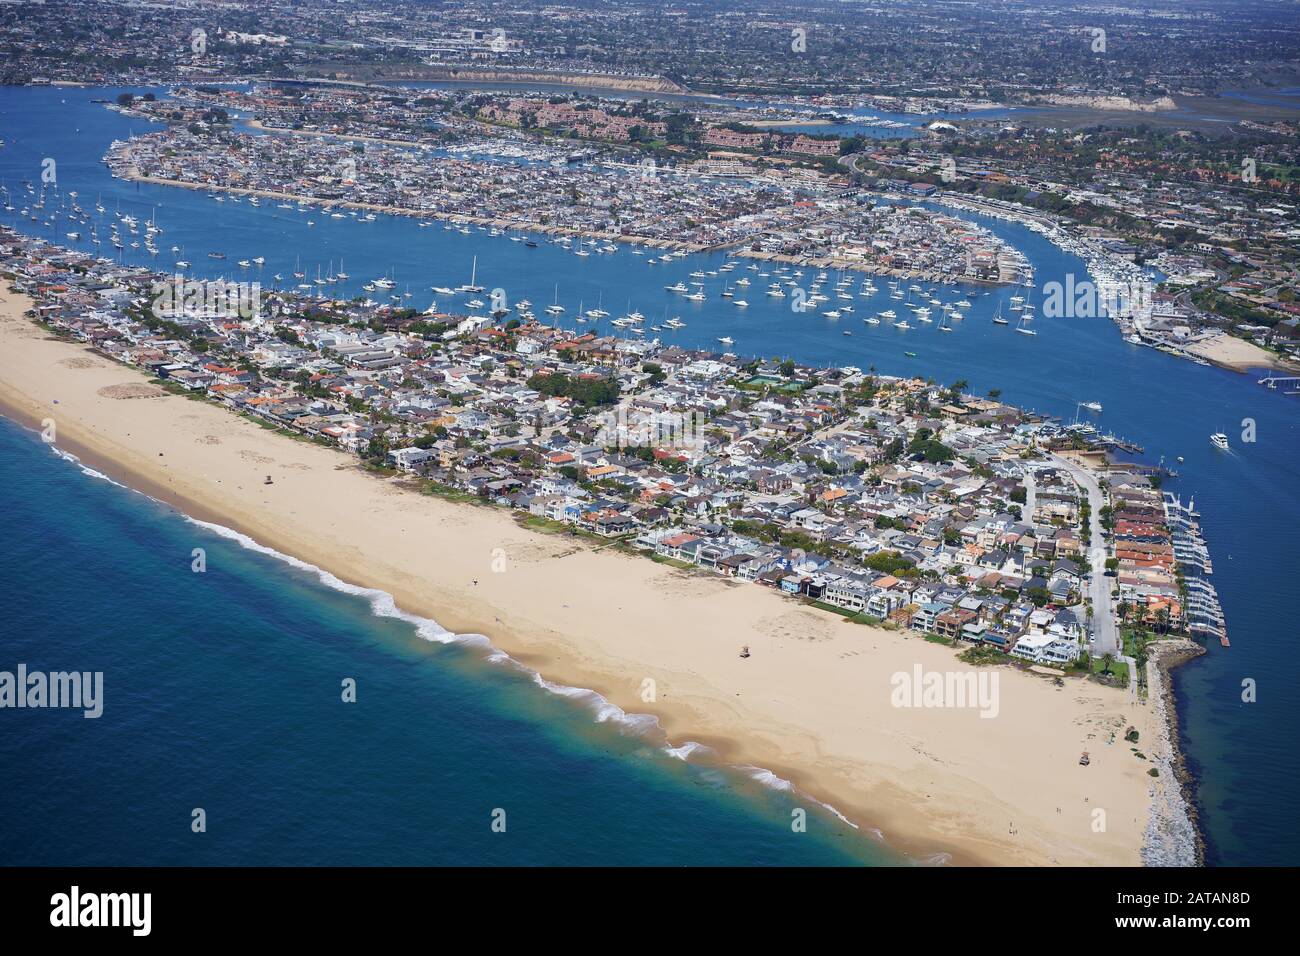 AERIAL VIEW. Balboa Peninsula with Lido Isle behind the main channel. Newport Beach, Orange County, California, USA. Stock Photo